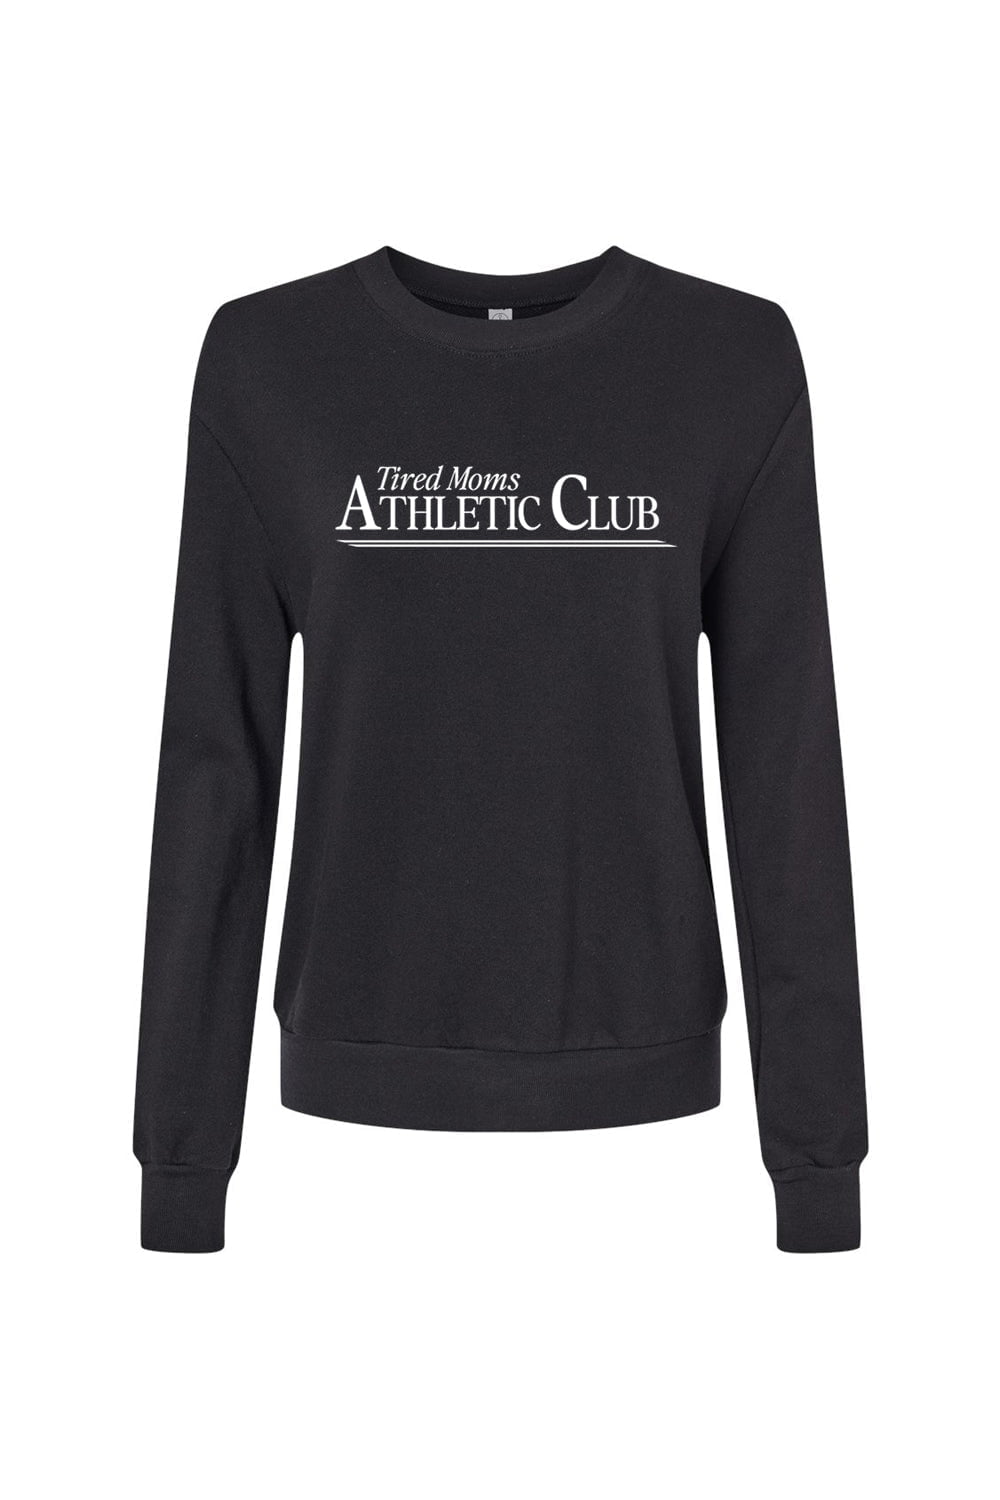 Sarah Marie Design Studio Sweatshirt XSmall / Black Tired Moms Athletic Club Women's Sweatshirt